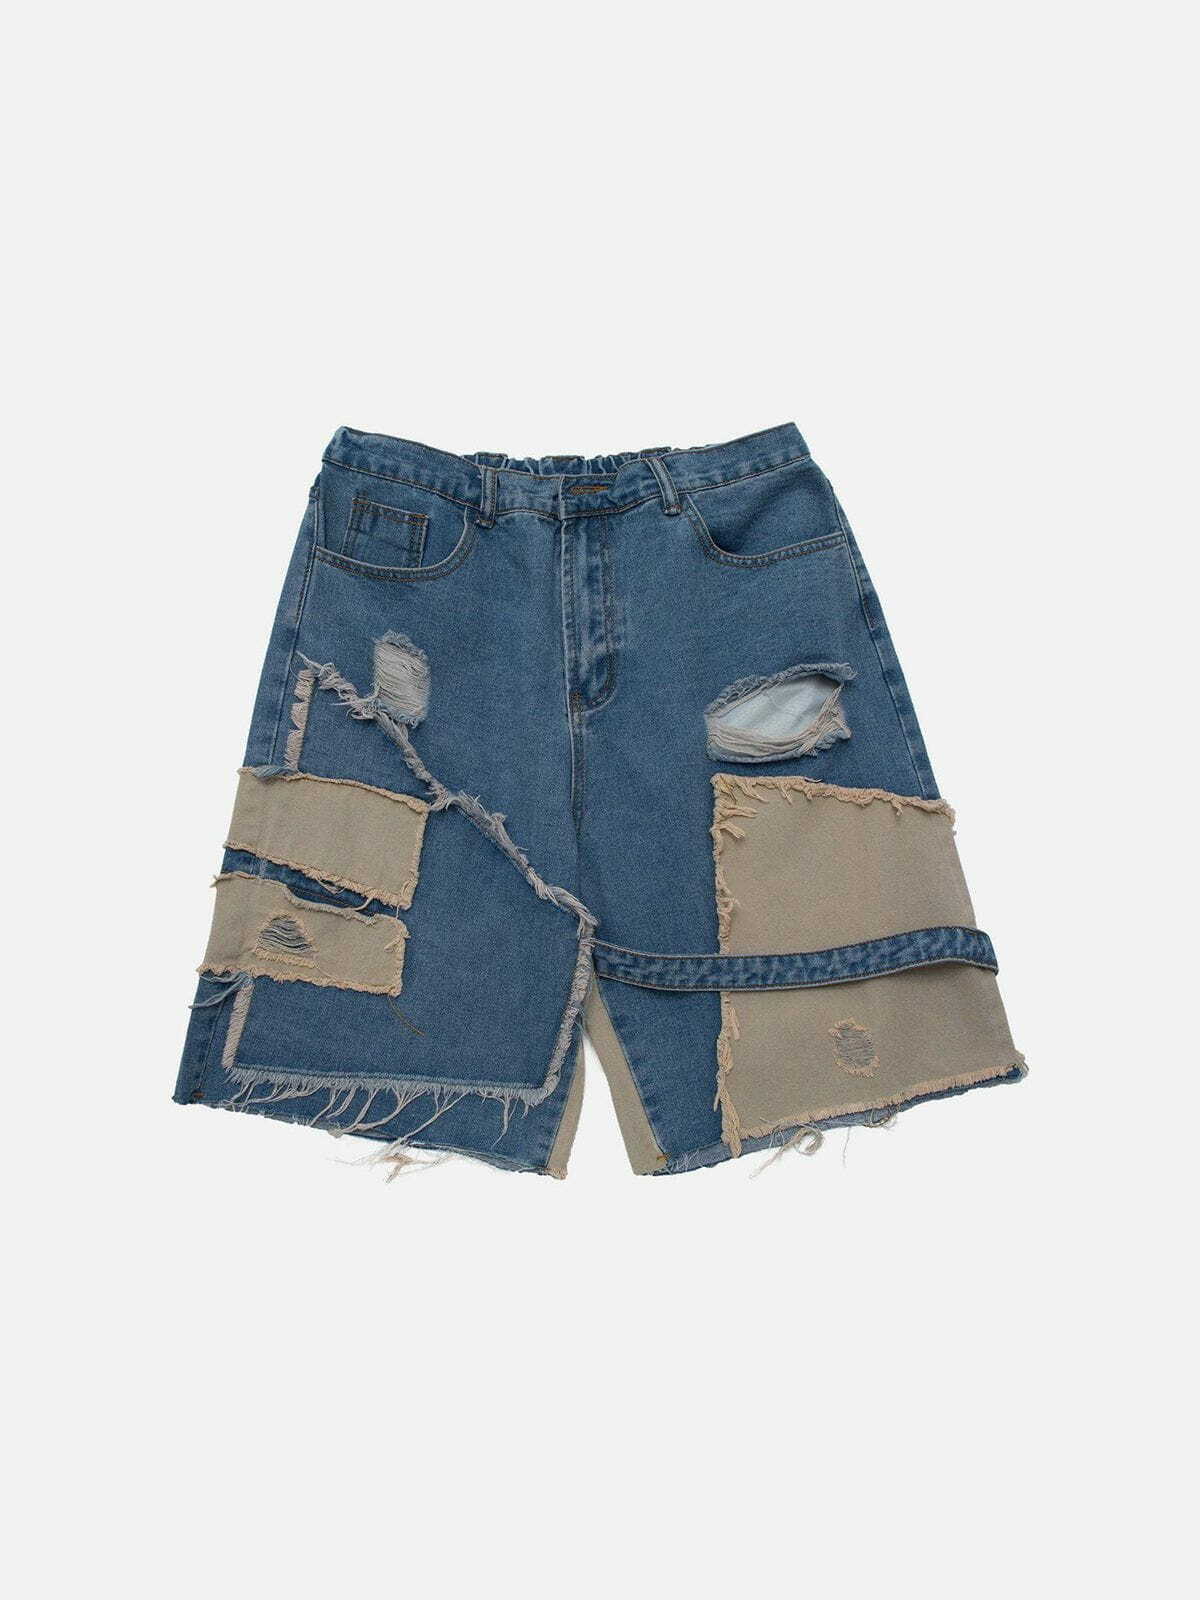 distressed denim shorts edgy urban essential 7423